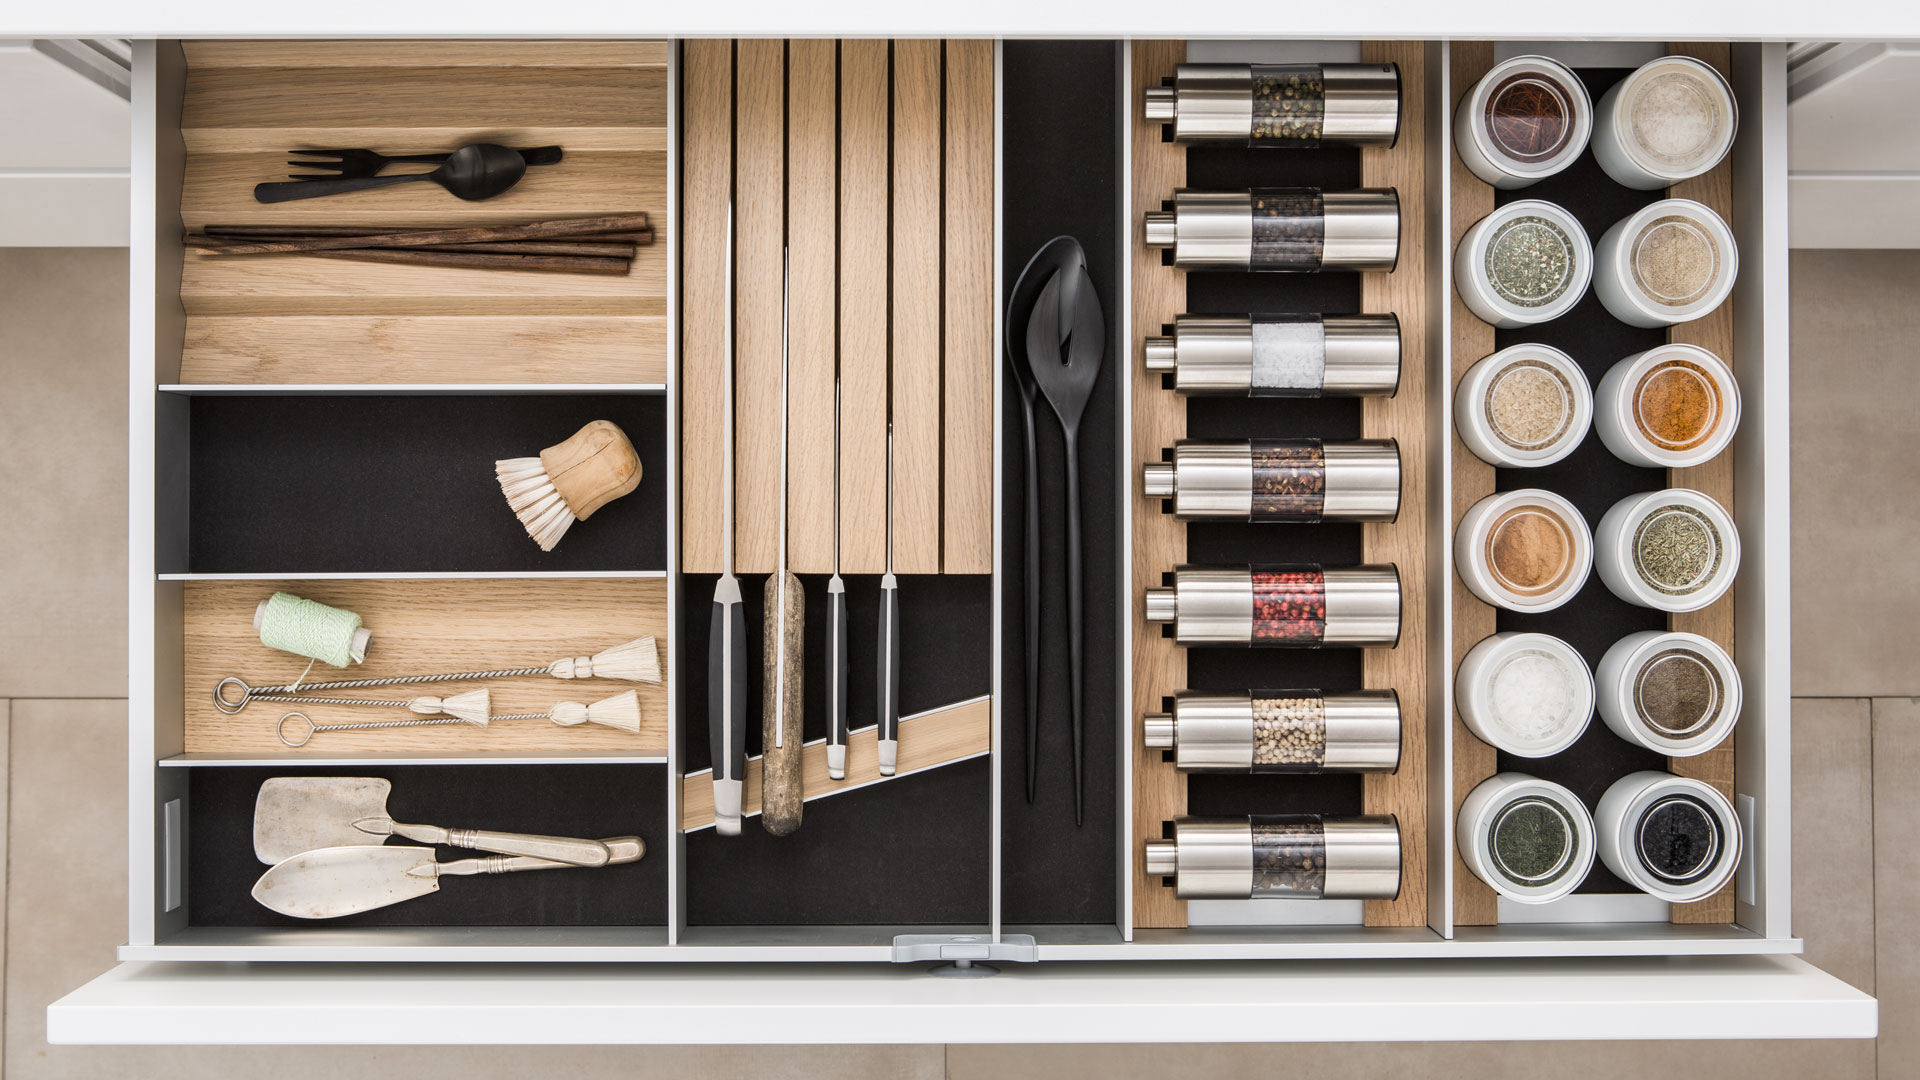 Organiser ses tiroirs de cuisine grâce au silicone - M6